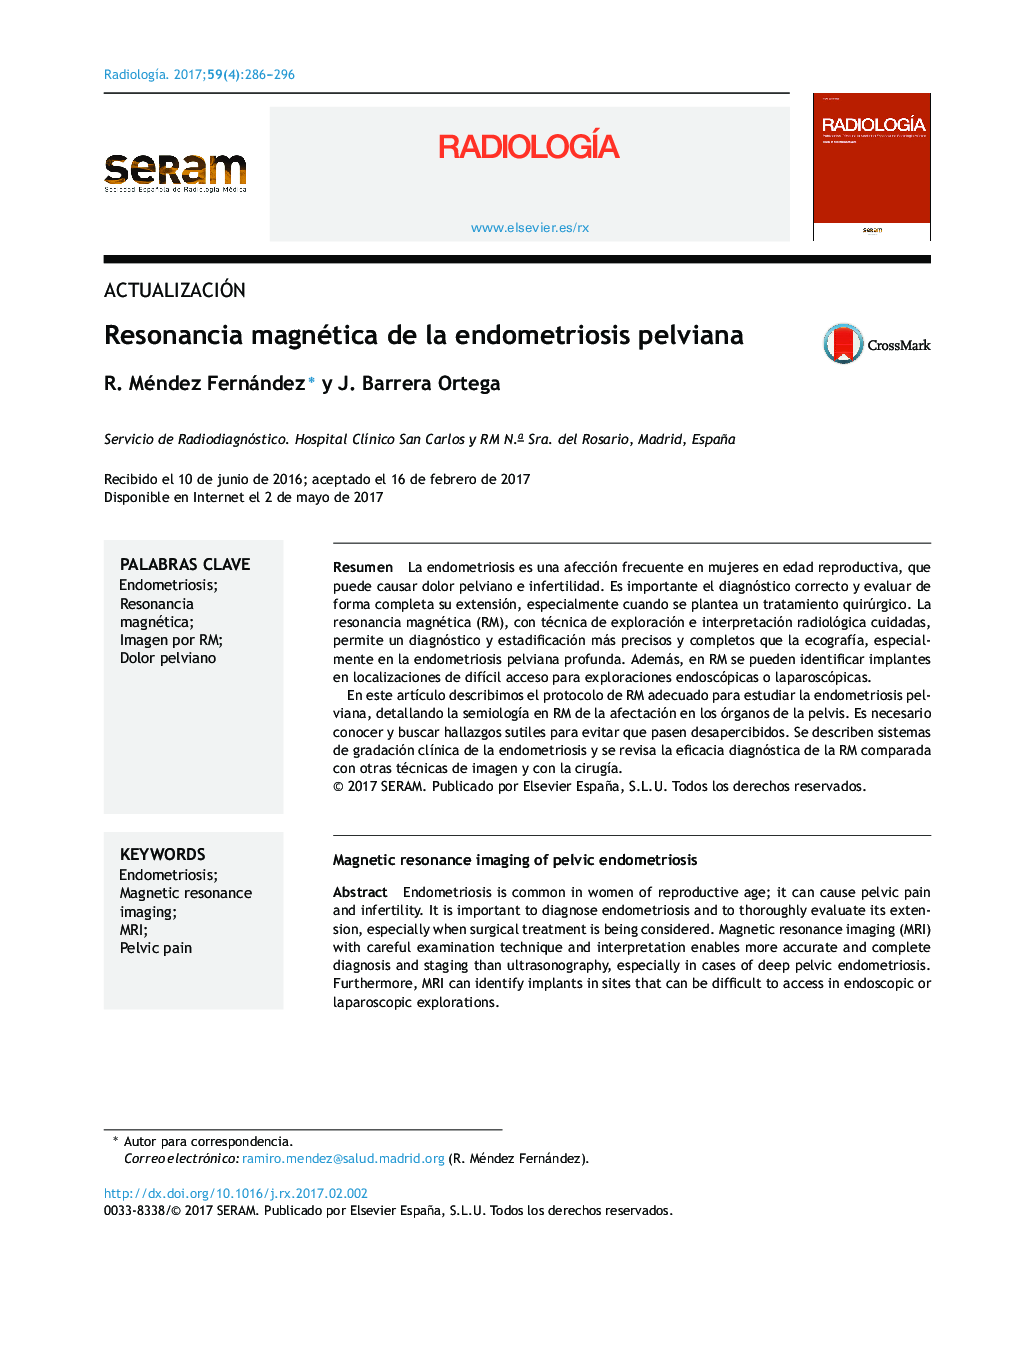 Resonancia magnética de la endometriosis pelviana